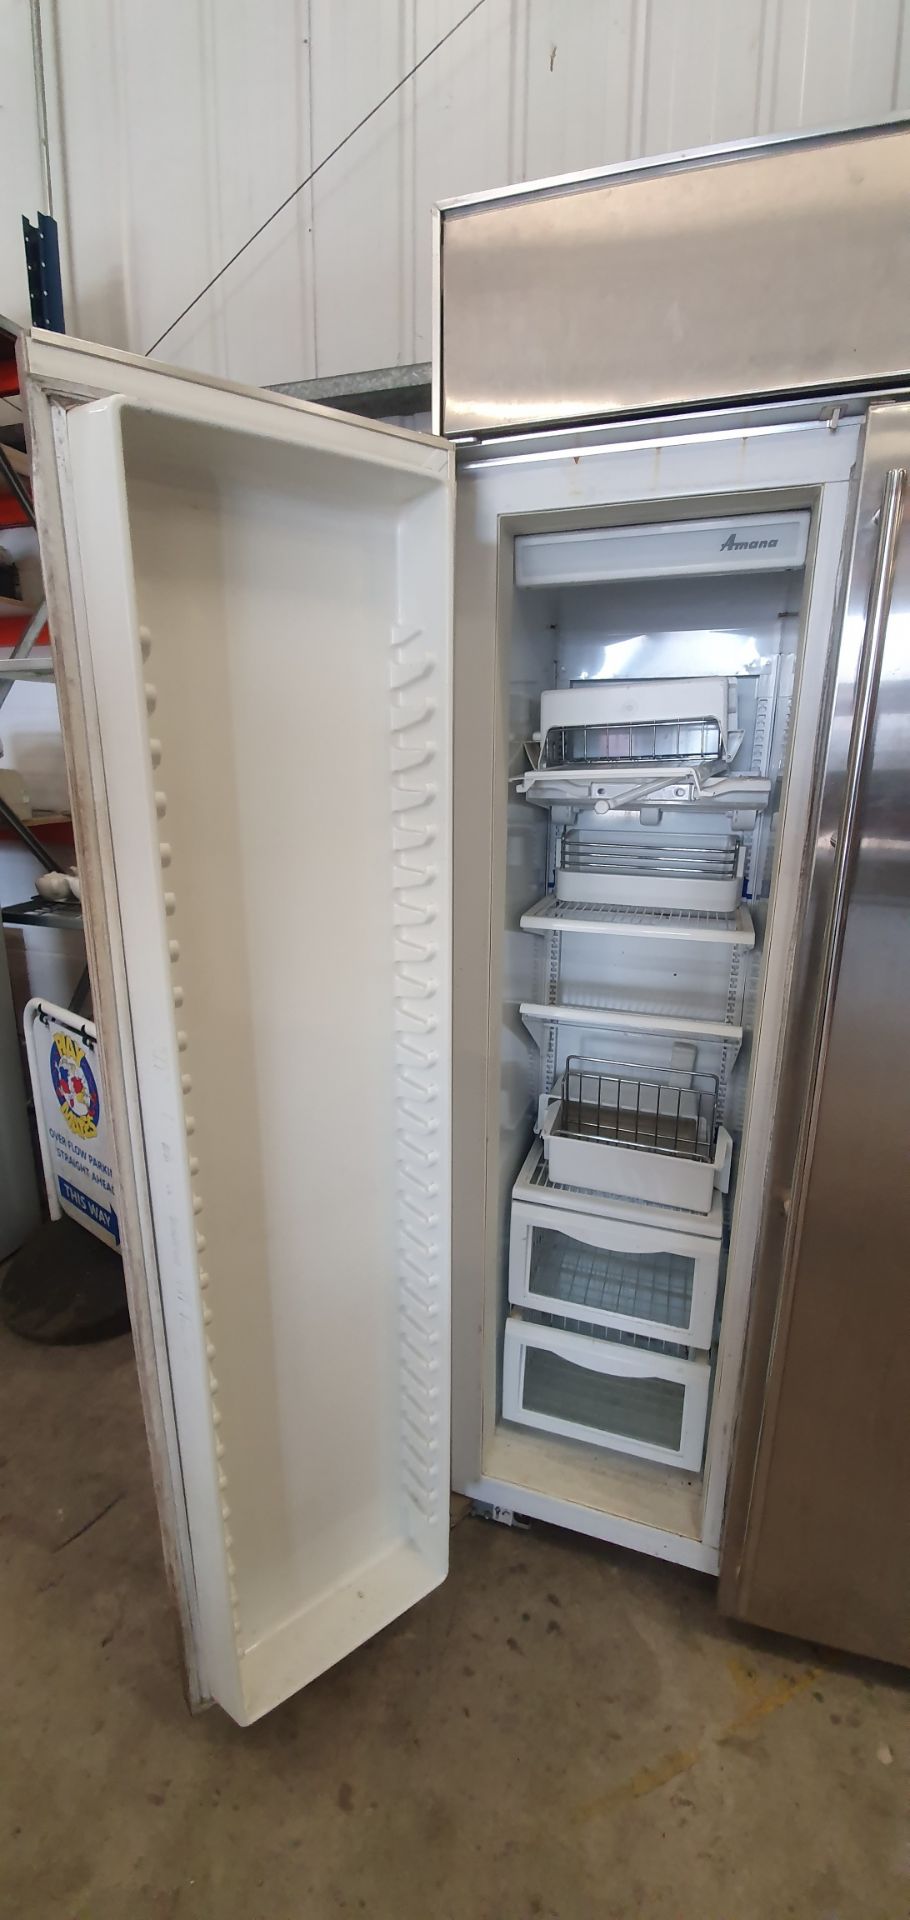 S/S Amana upright domestic fridge/freezer 1250w x 650d x 2100h - at Cornwall Street, Hull, HU8 8AF - Image 2 of 5